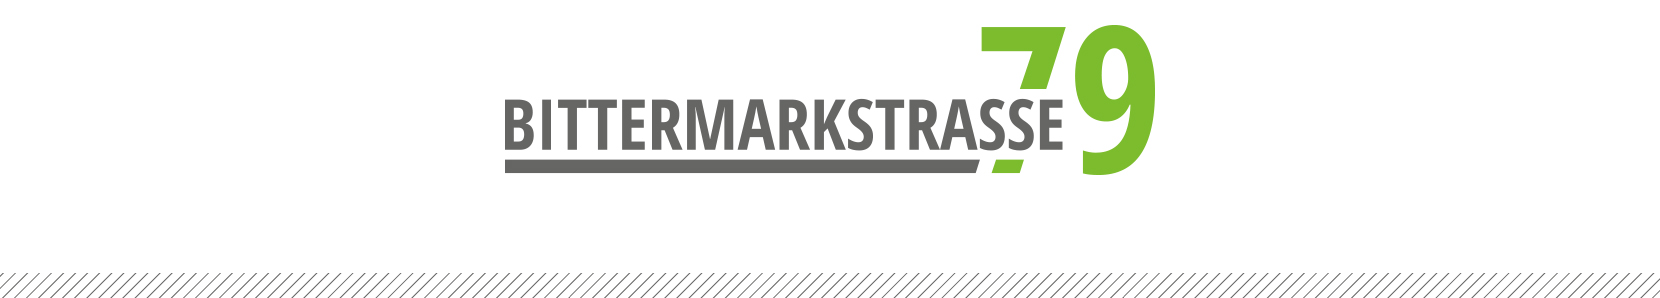 BITTERMARKSTRASSE79 Logo